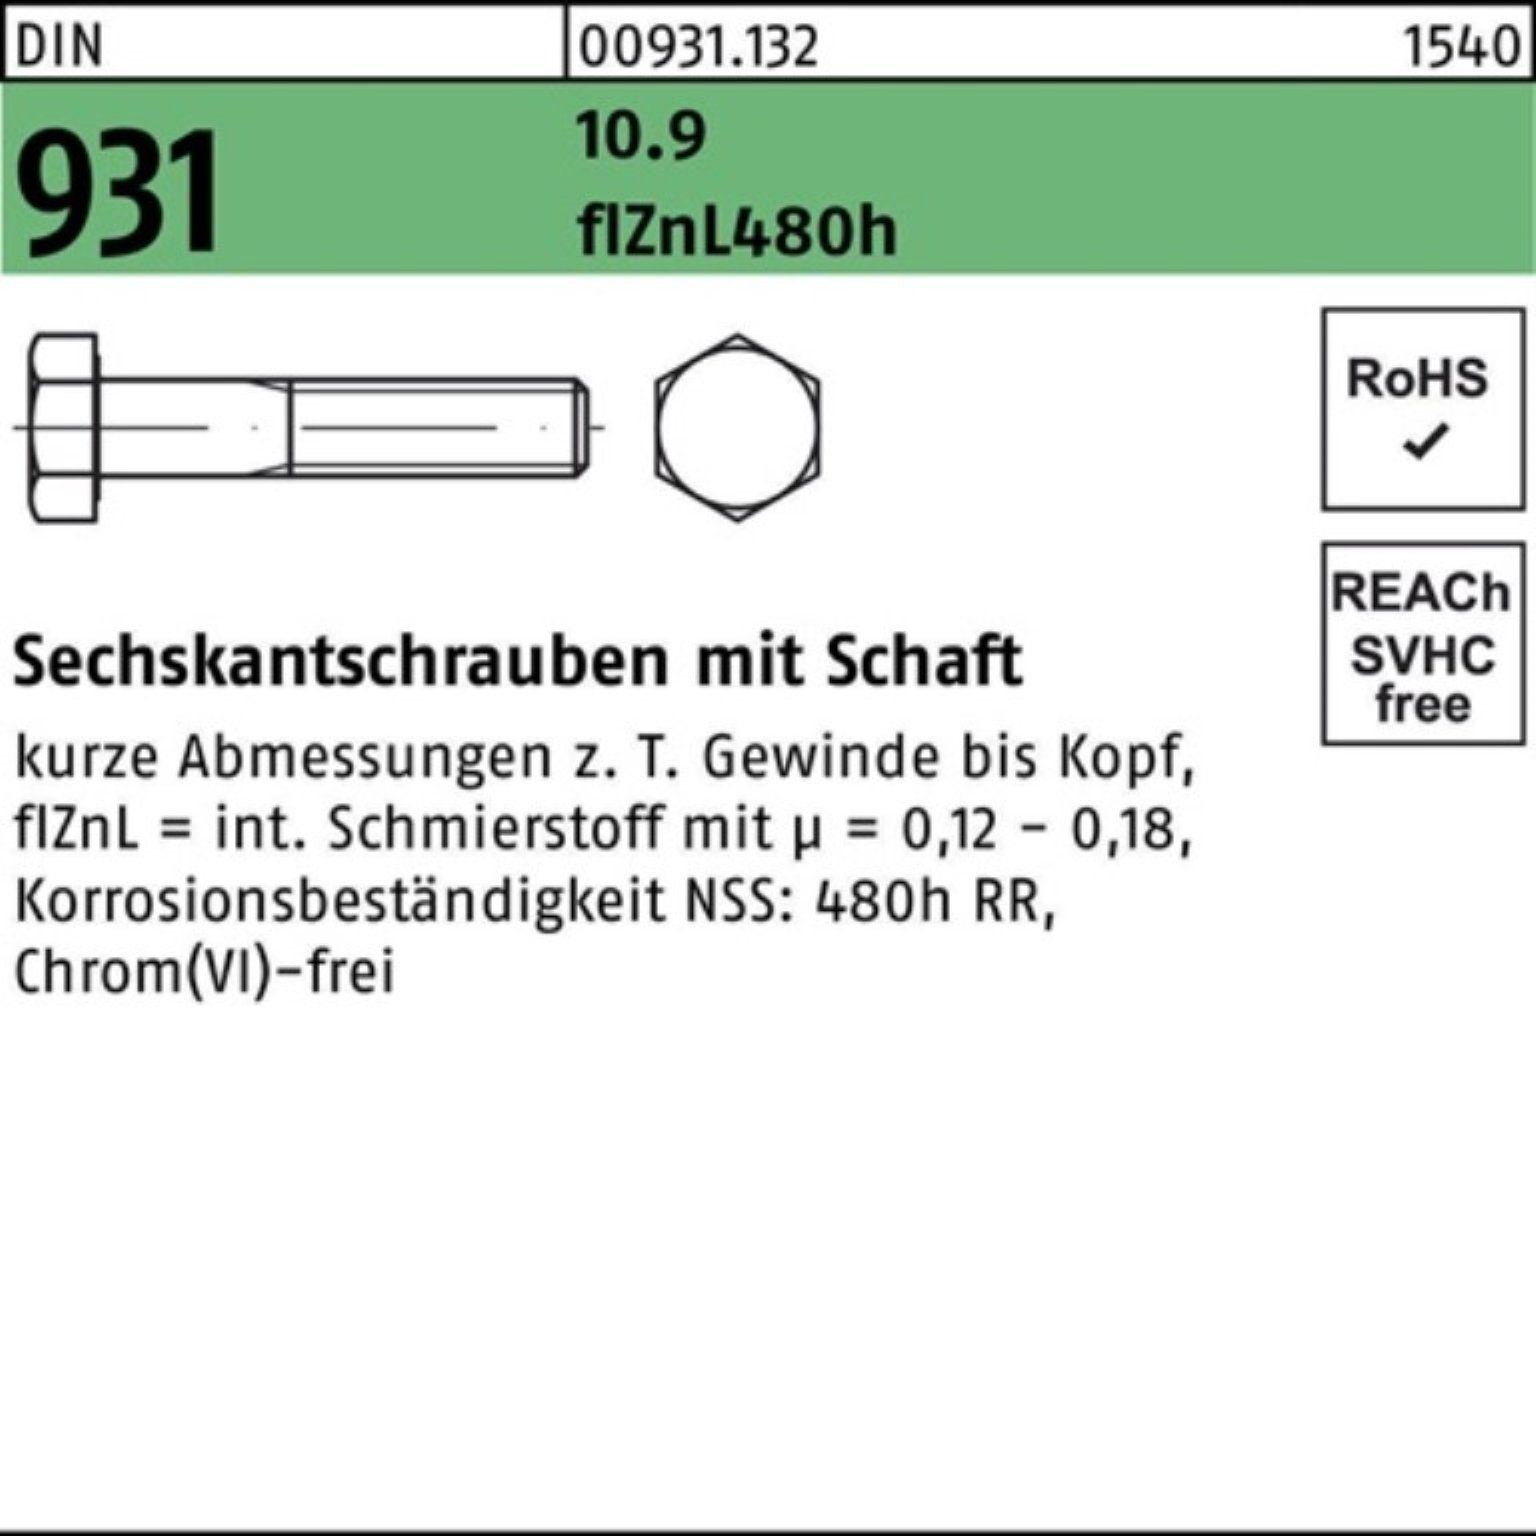 Reyher Sechskantschraube 200er Pack Sechskantschraube DIN 931 Schaft M8x 70 10.9 flZnL/nc/x/x/4 | Schrauben